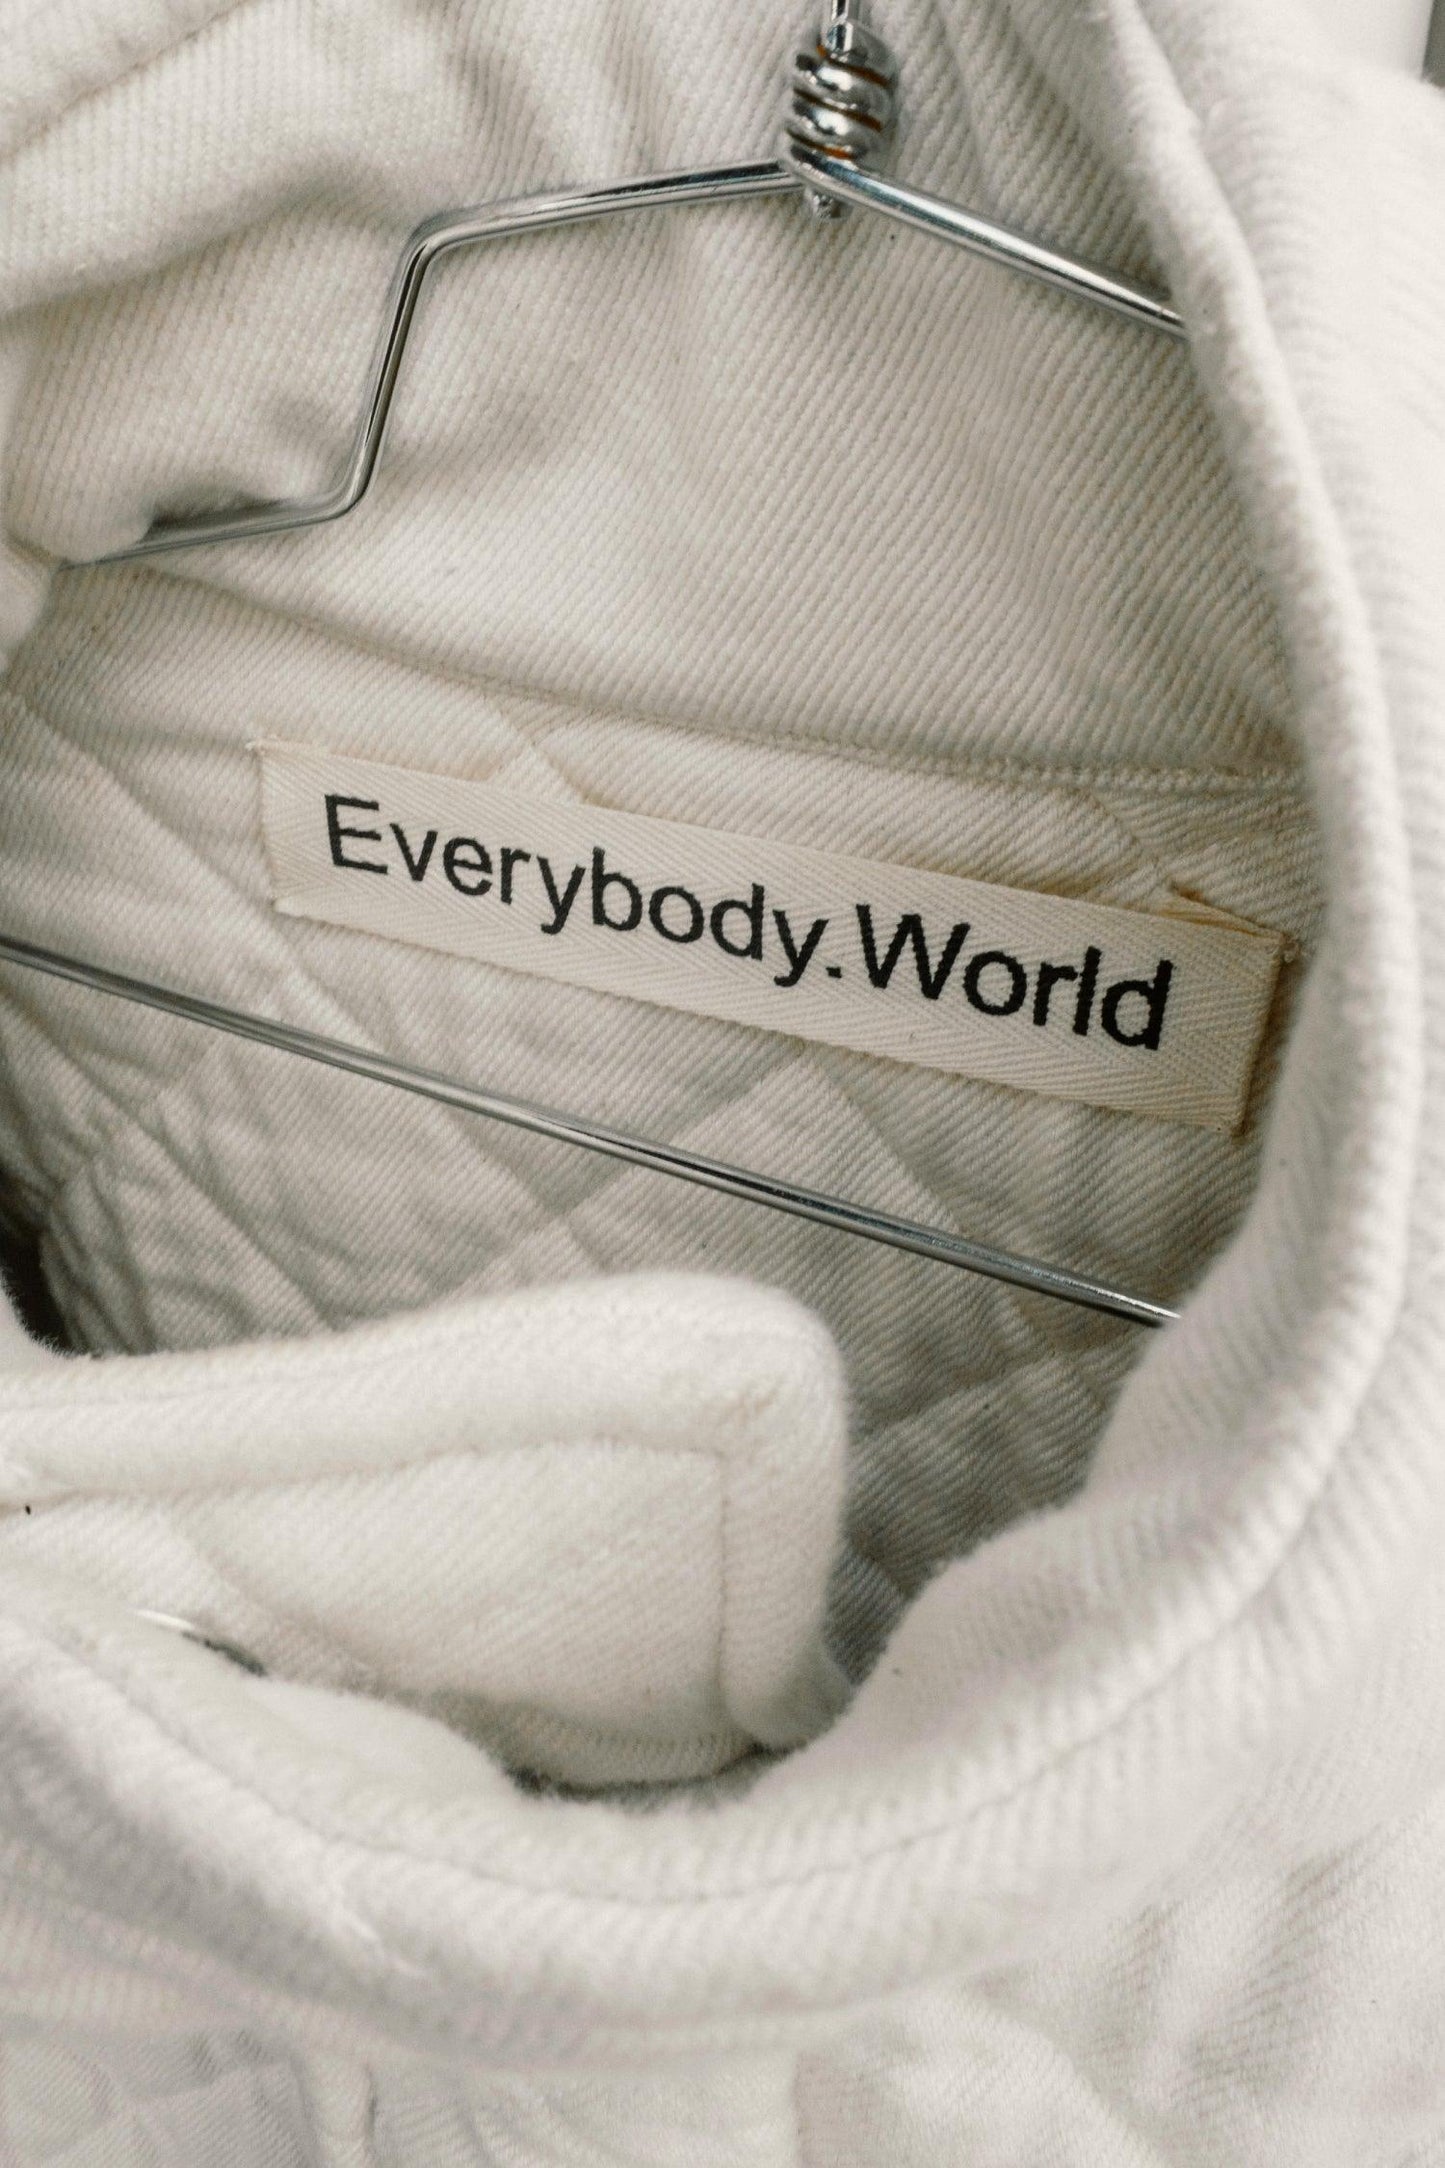 Quilt Coat - Everybody.World